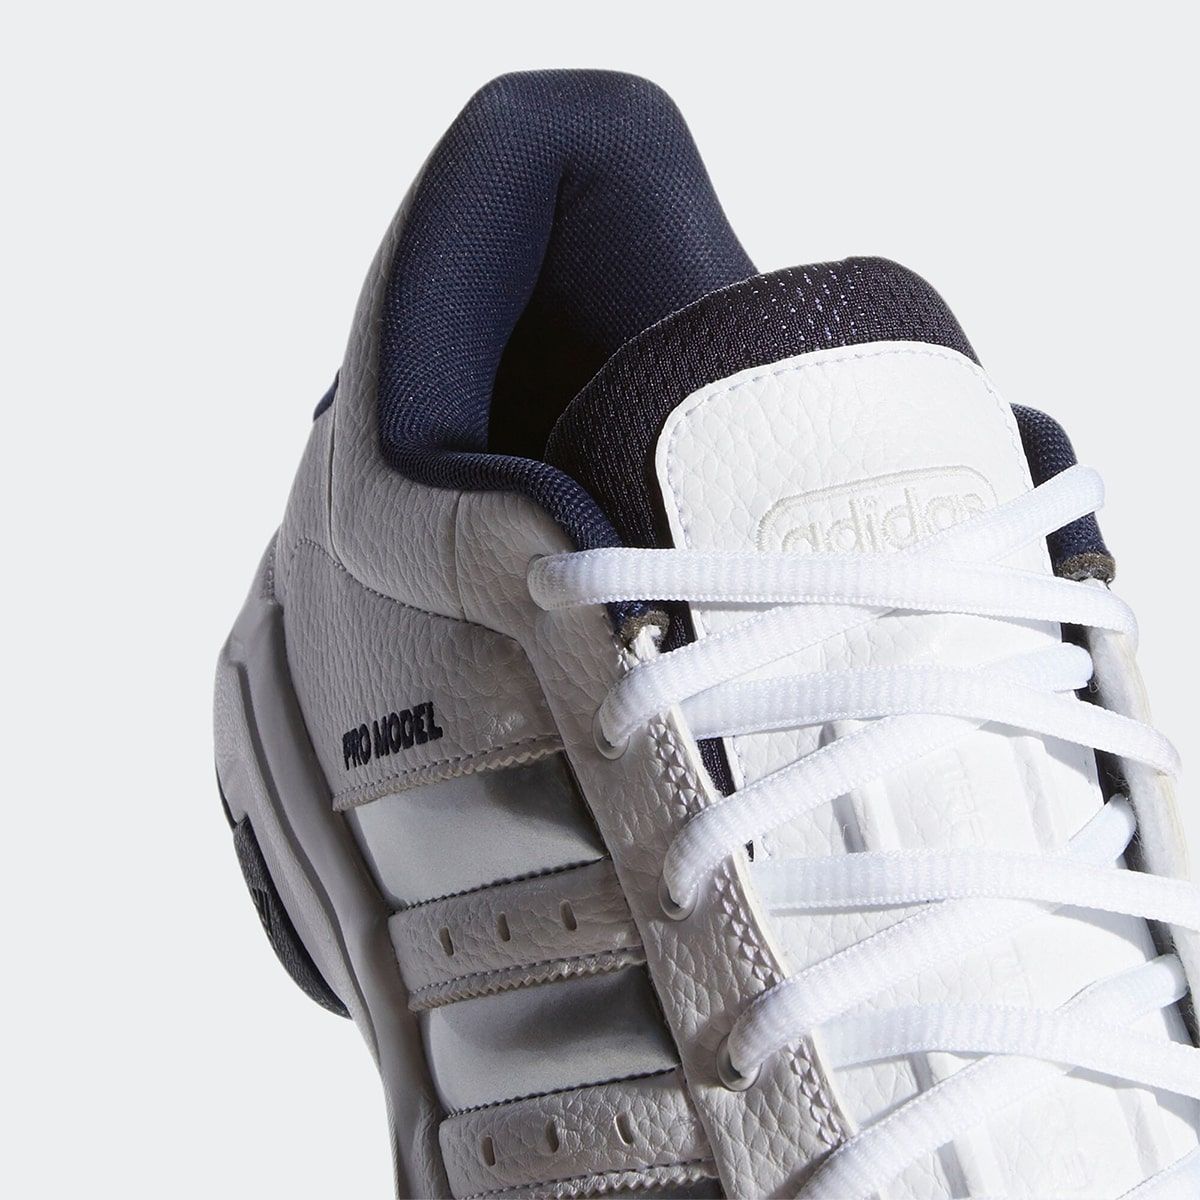 Adidas pro model sneakers. 'Mens 6.5 | eBay